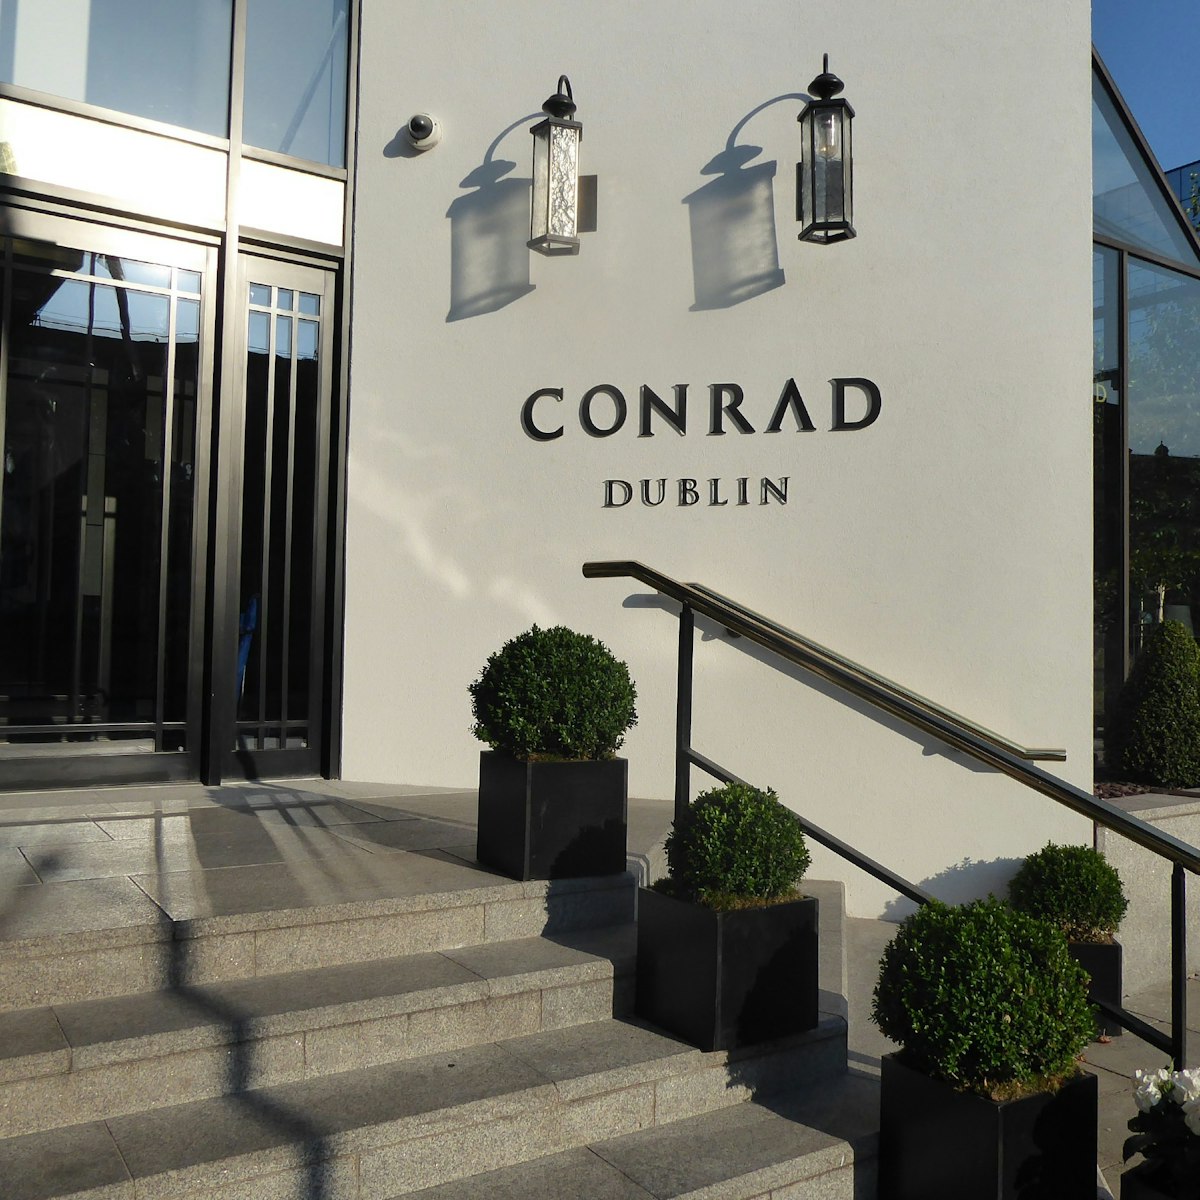 Conrad Dublin hotel entrance.